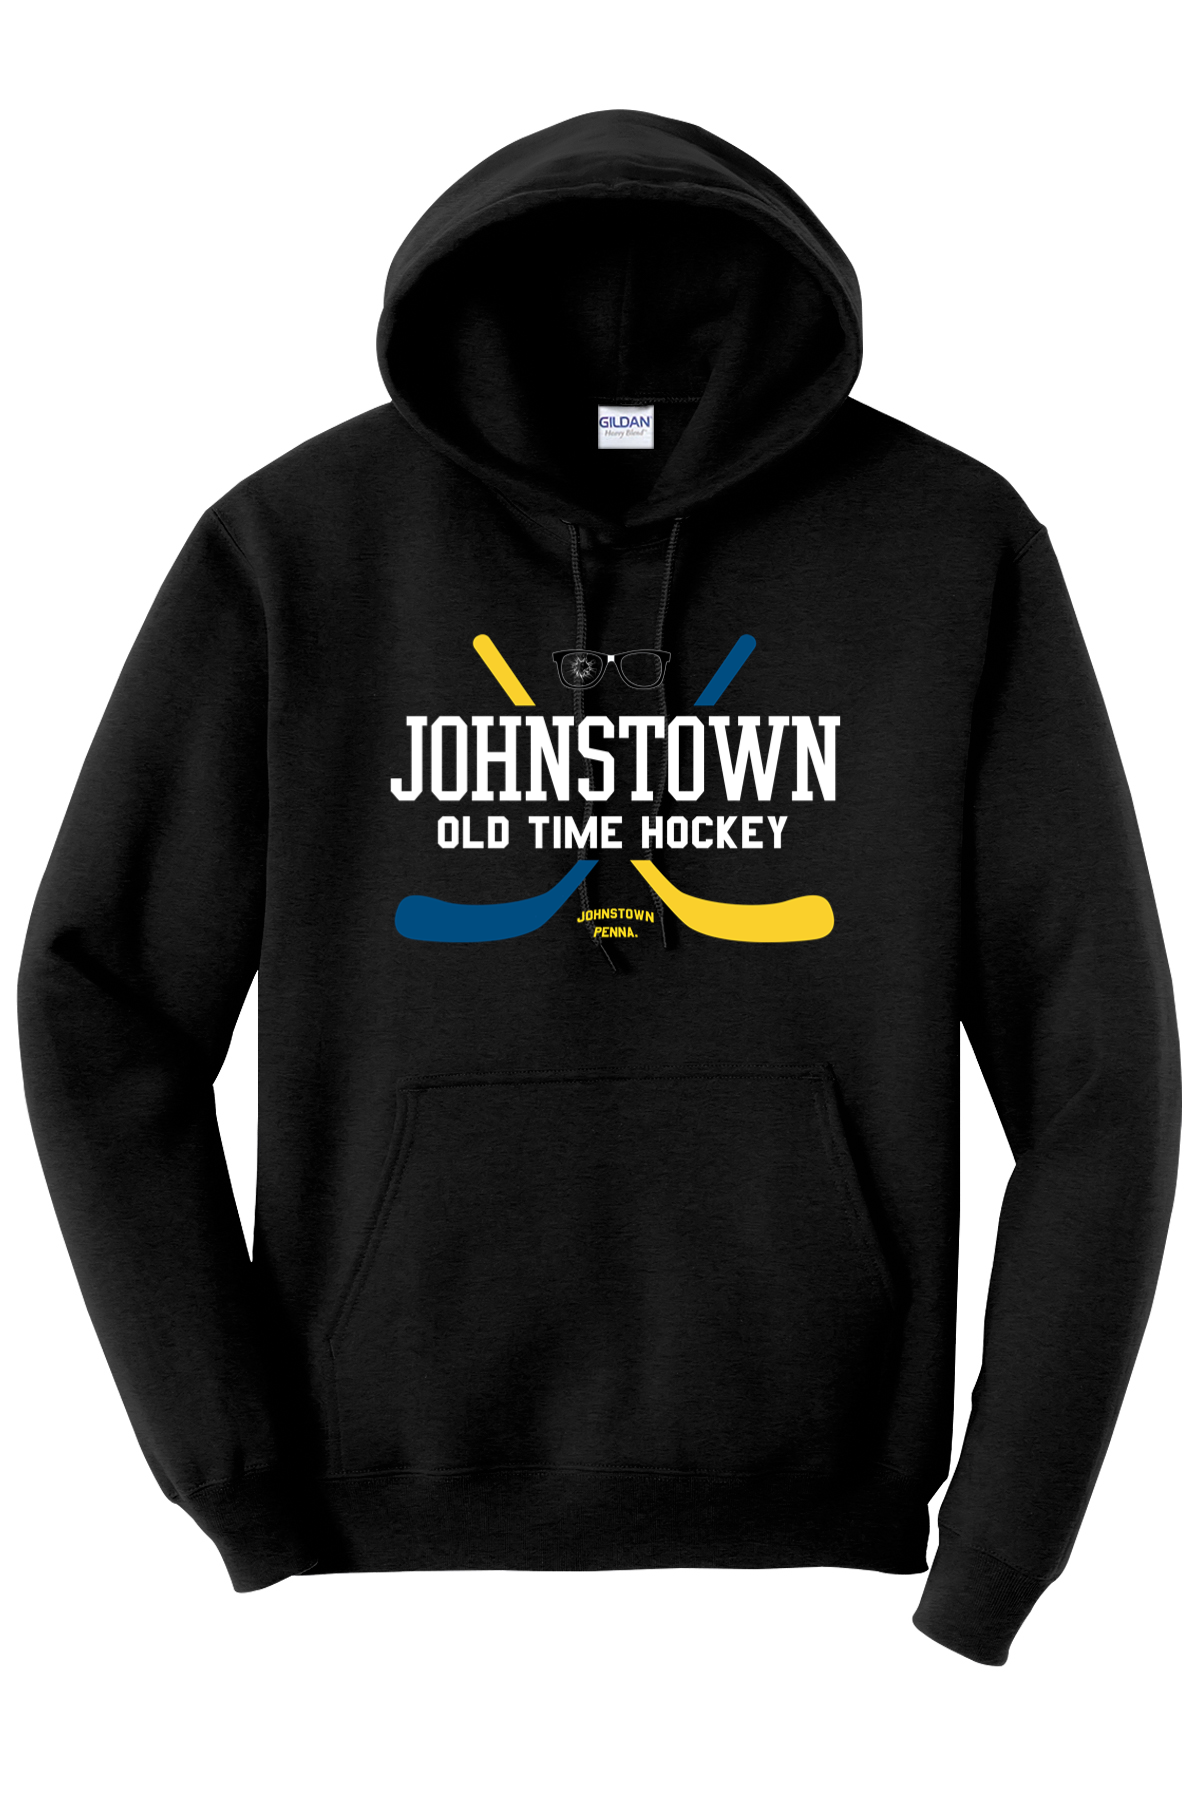 Johnstown Old Time Hockey - Hoodie - Yinzylvania